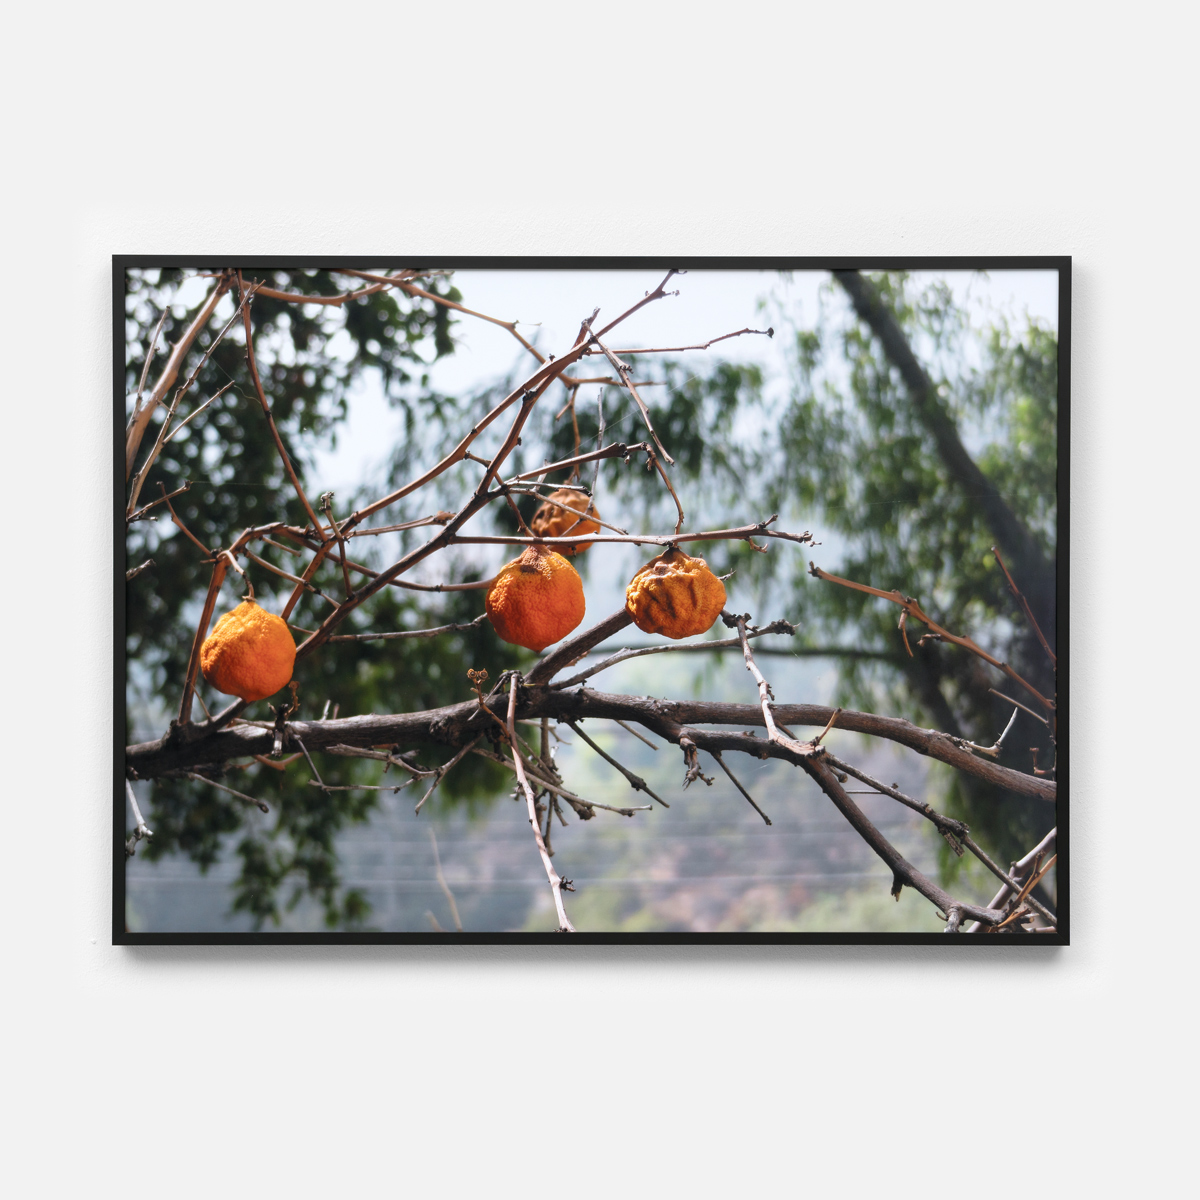 Untitled (Oranges) II